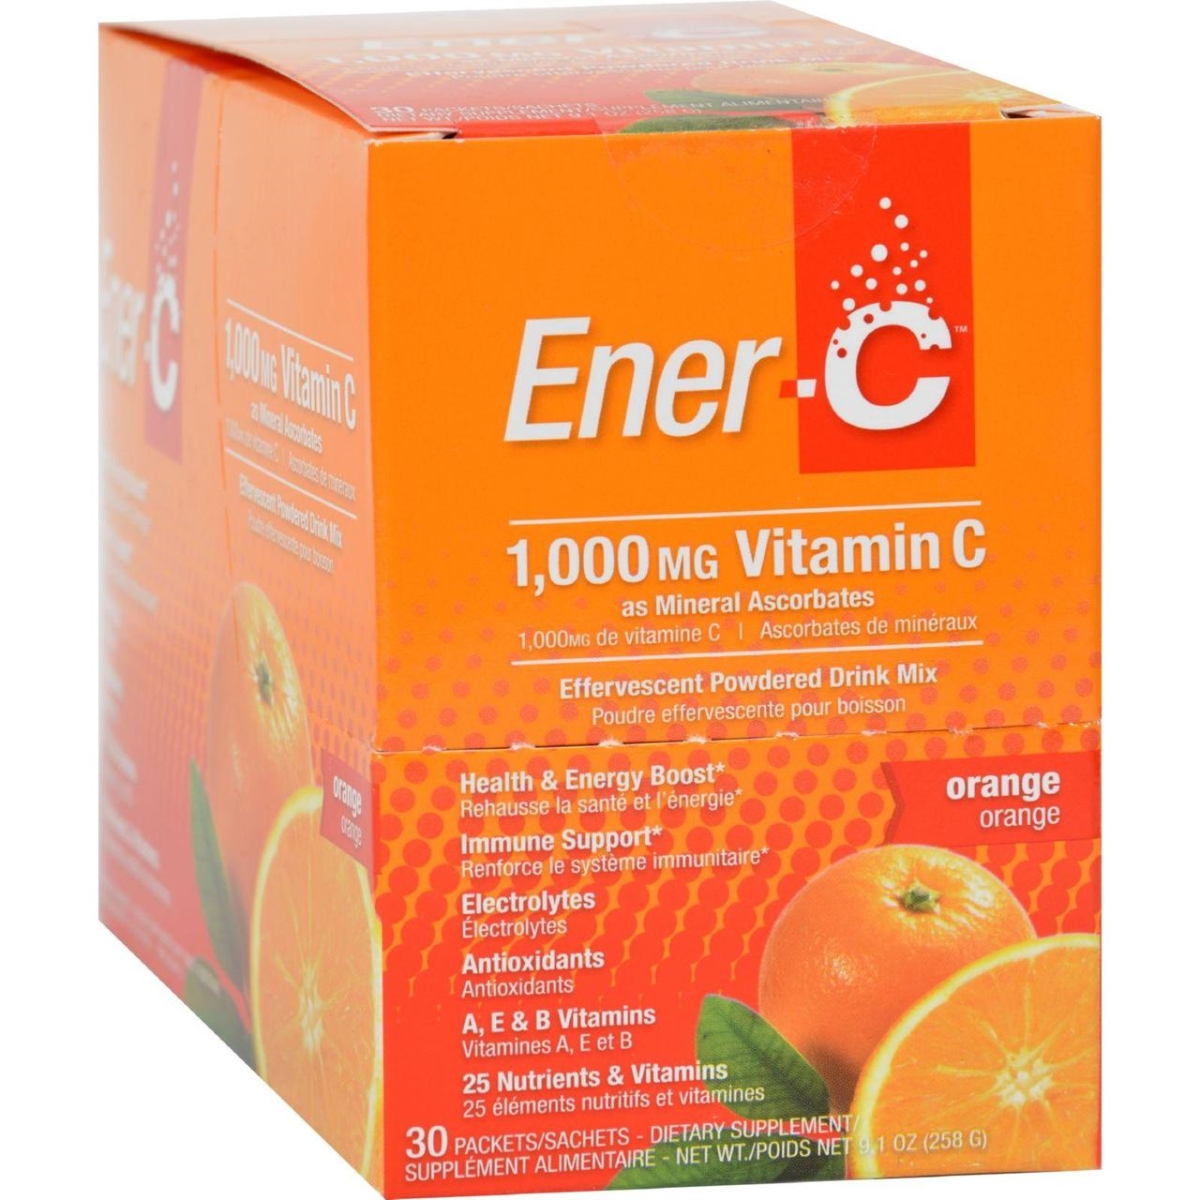 Hg1275163 1000 Mg Vitamin Drink Mix - Orange, 30 Packet